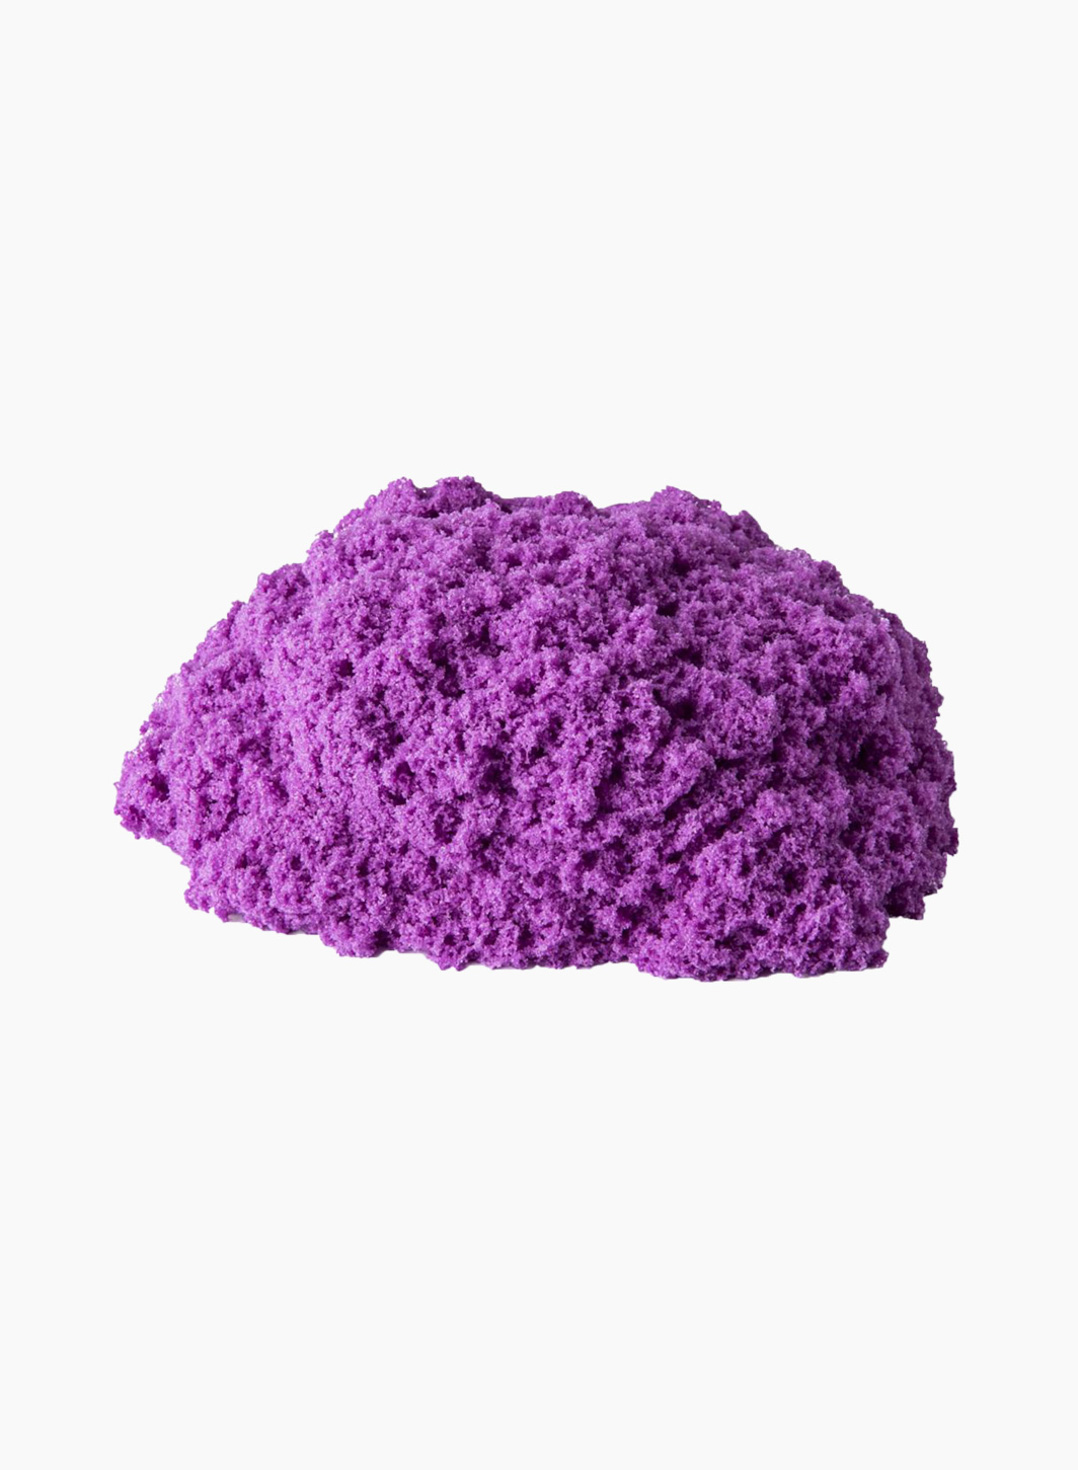 Spin Master Kinetic Sand Purple